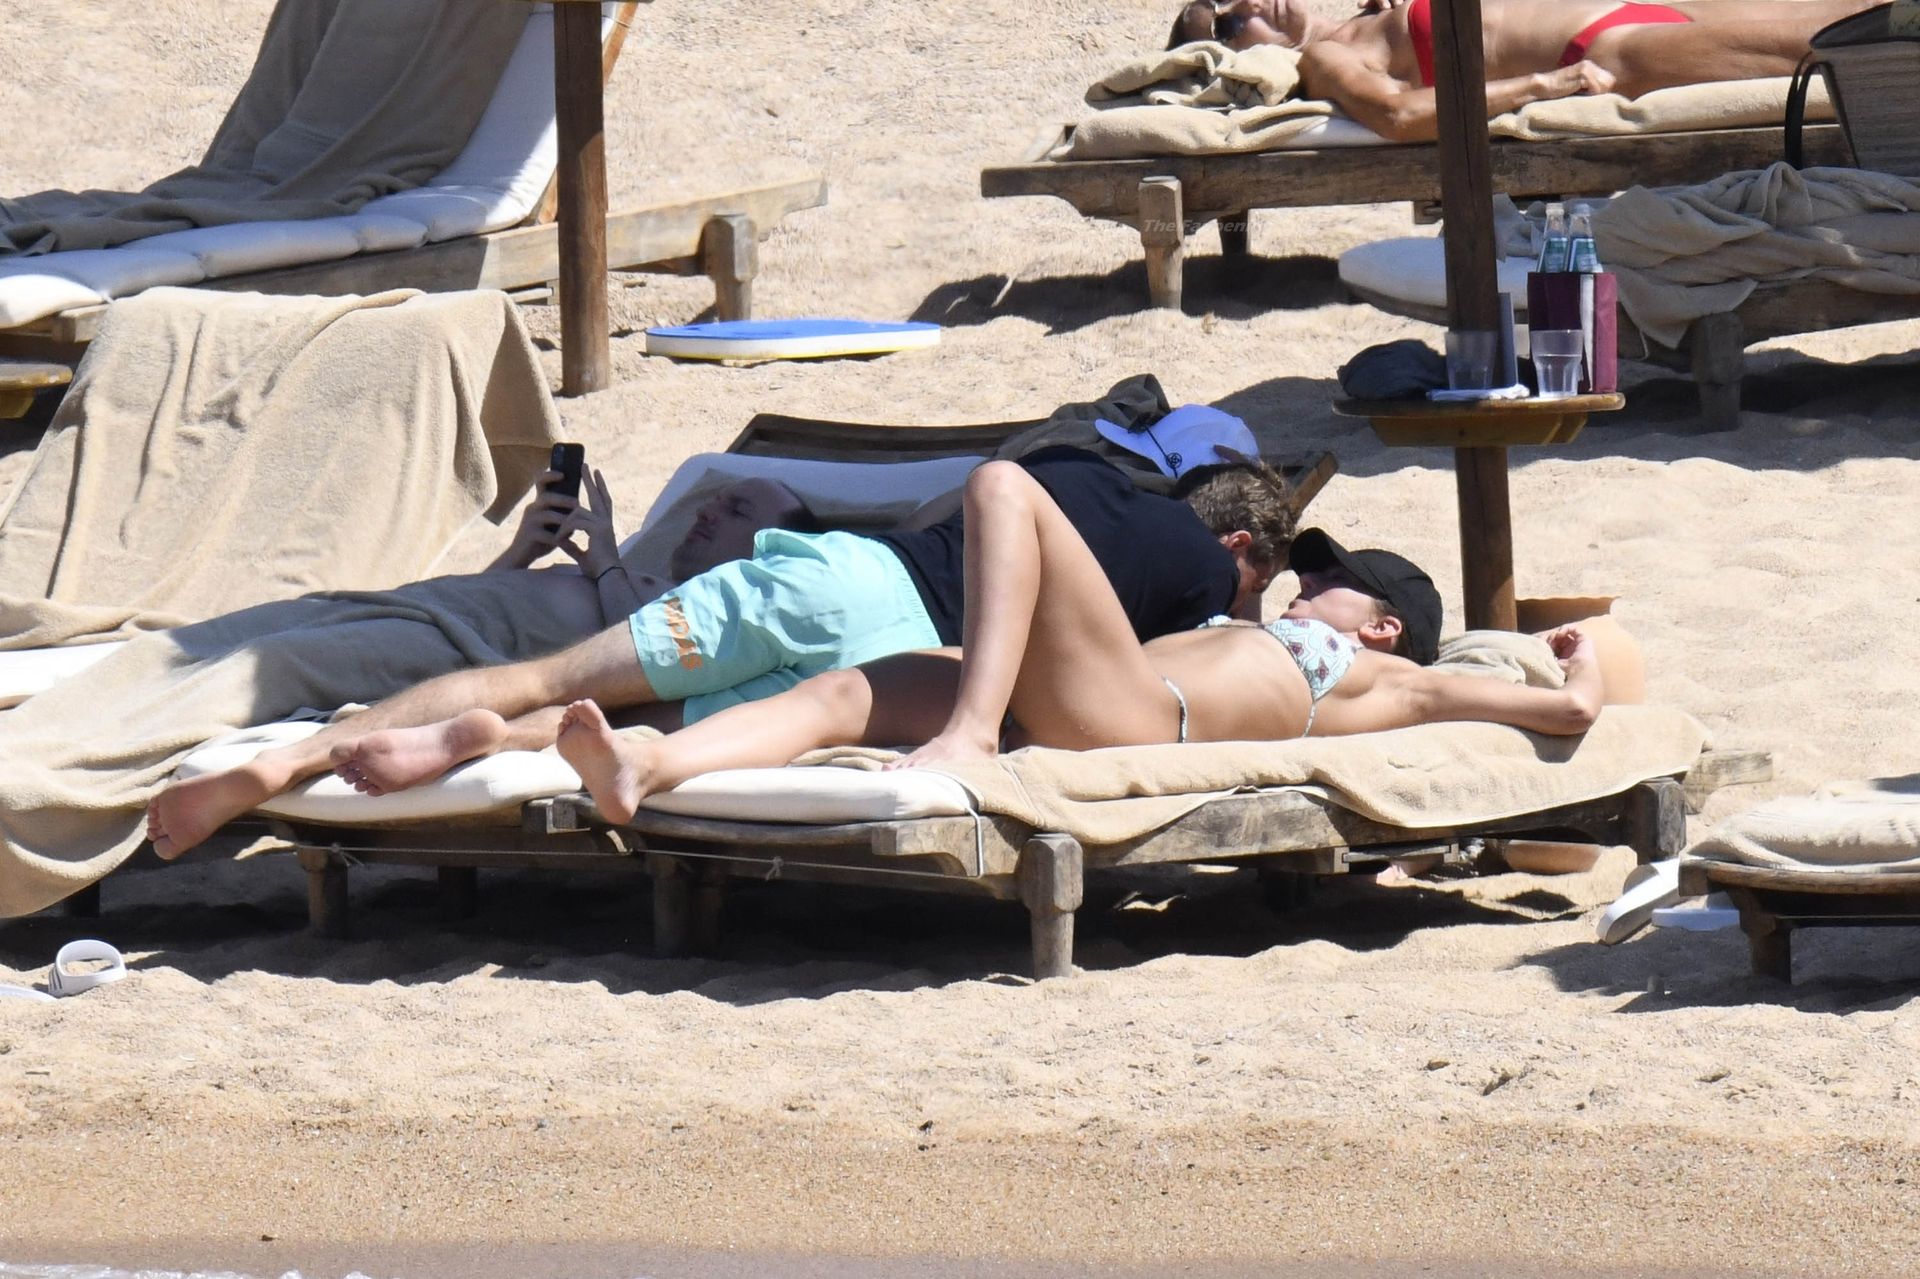 Thomas Müller (Bayern Munchen player) is seen enjoying holidays in Sardinia...